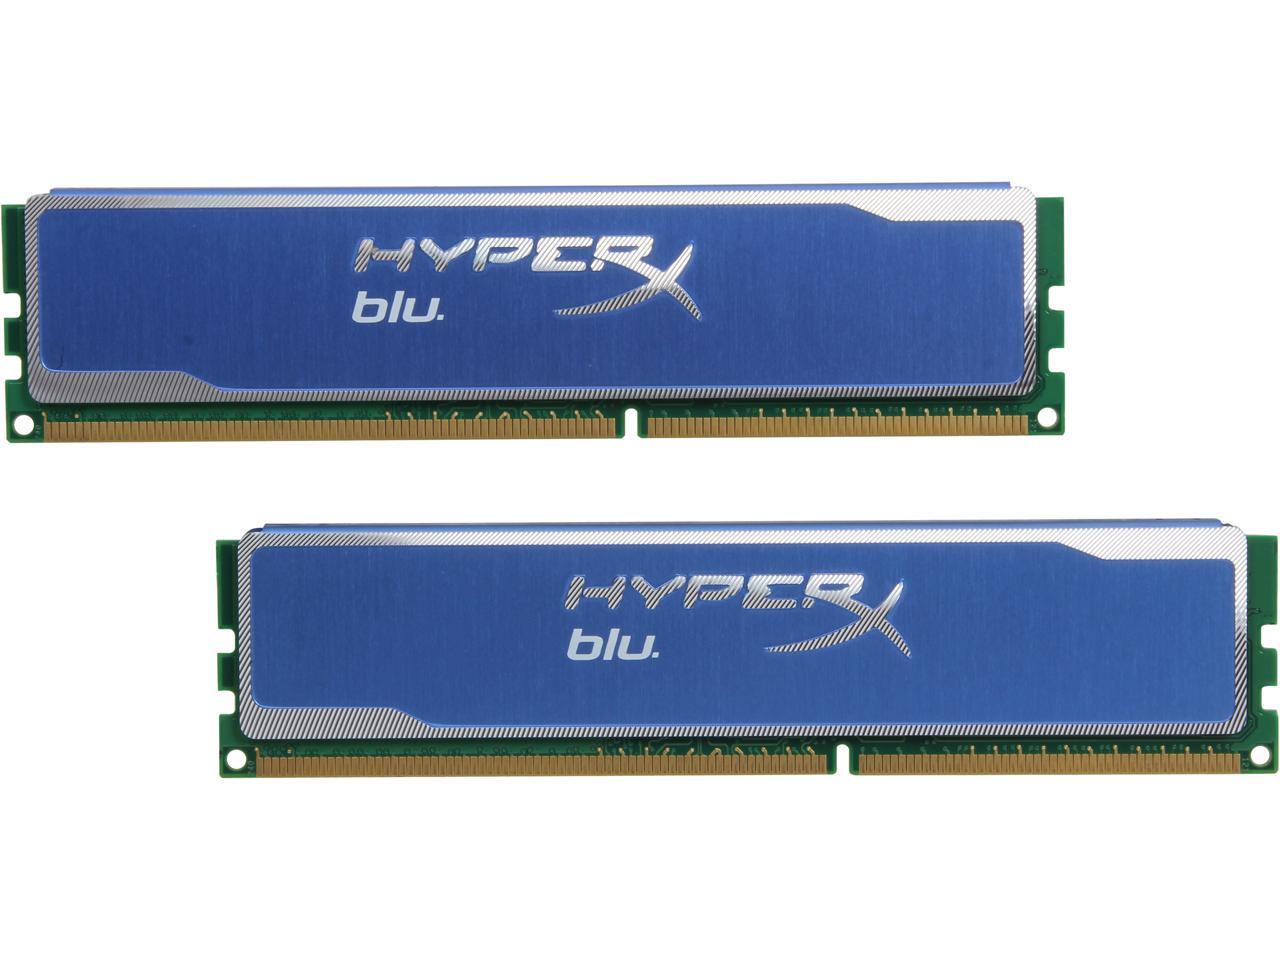 HyperX Blu 8GB x 4GB) DDR3 1333 Desktop Model KHX1333C9D3B1K2/8G - Newegg.com